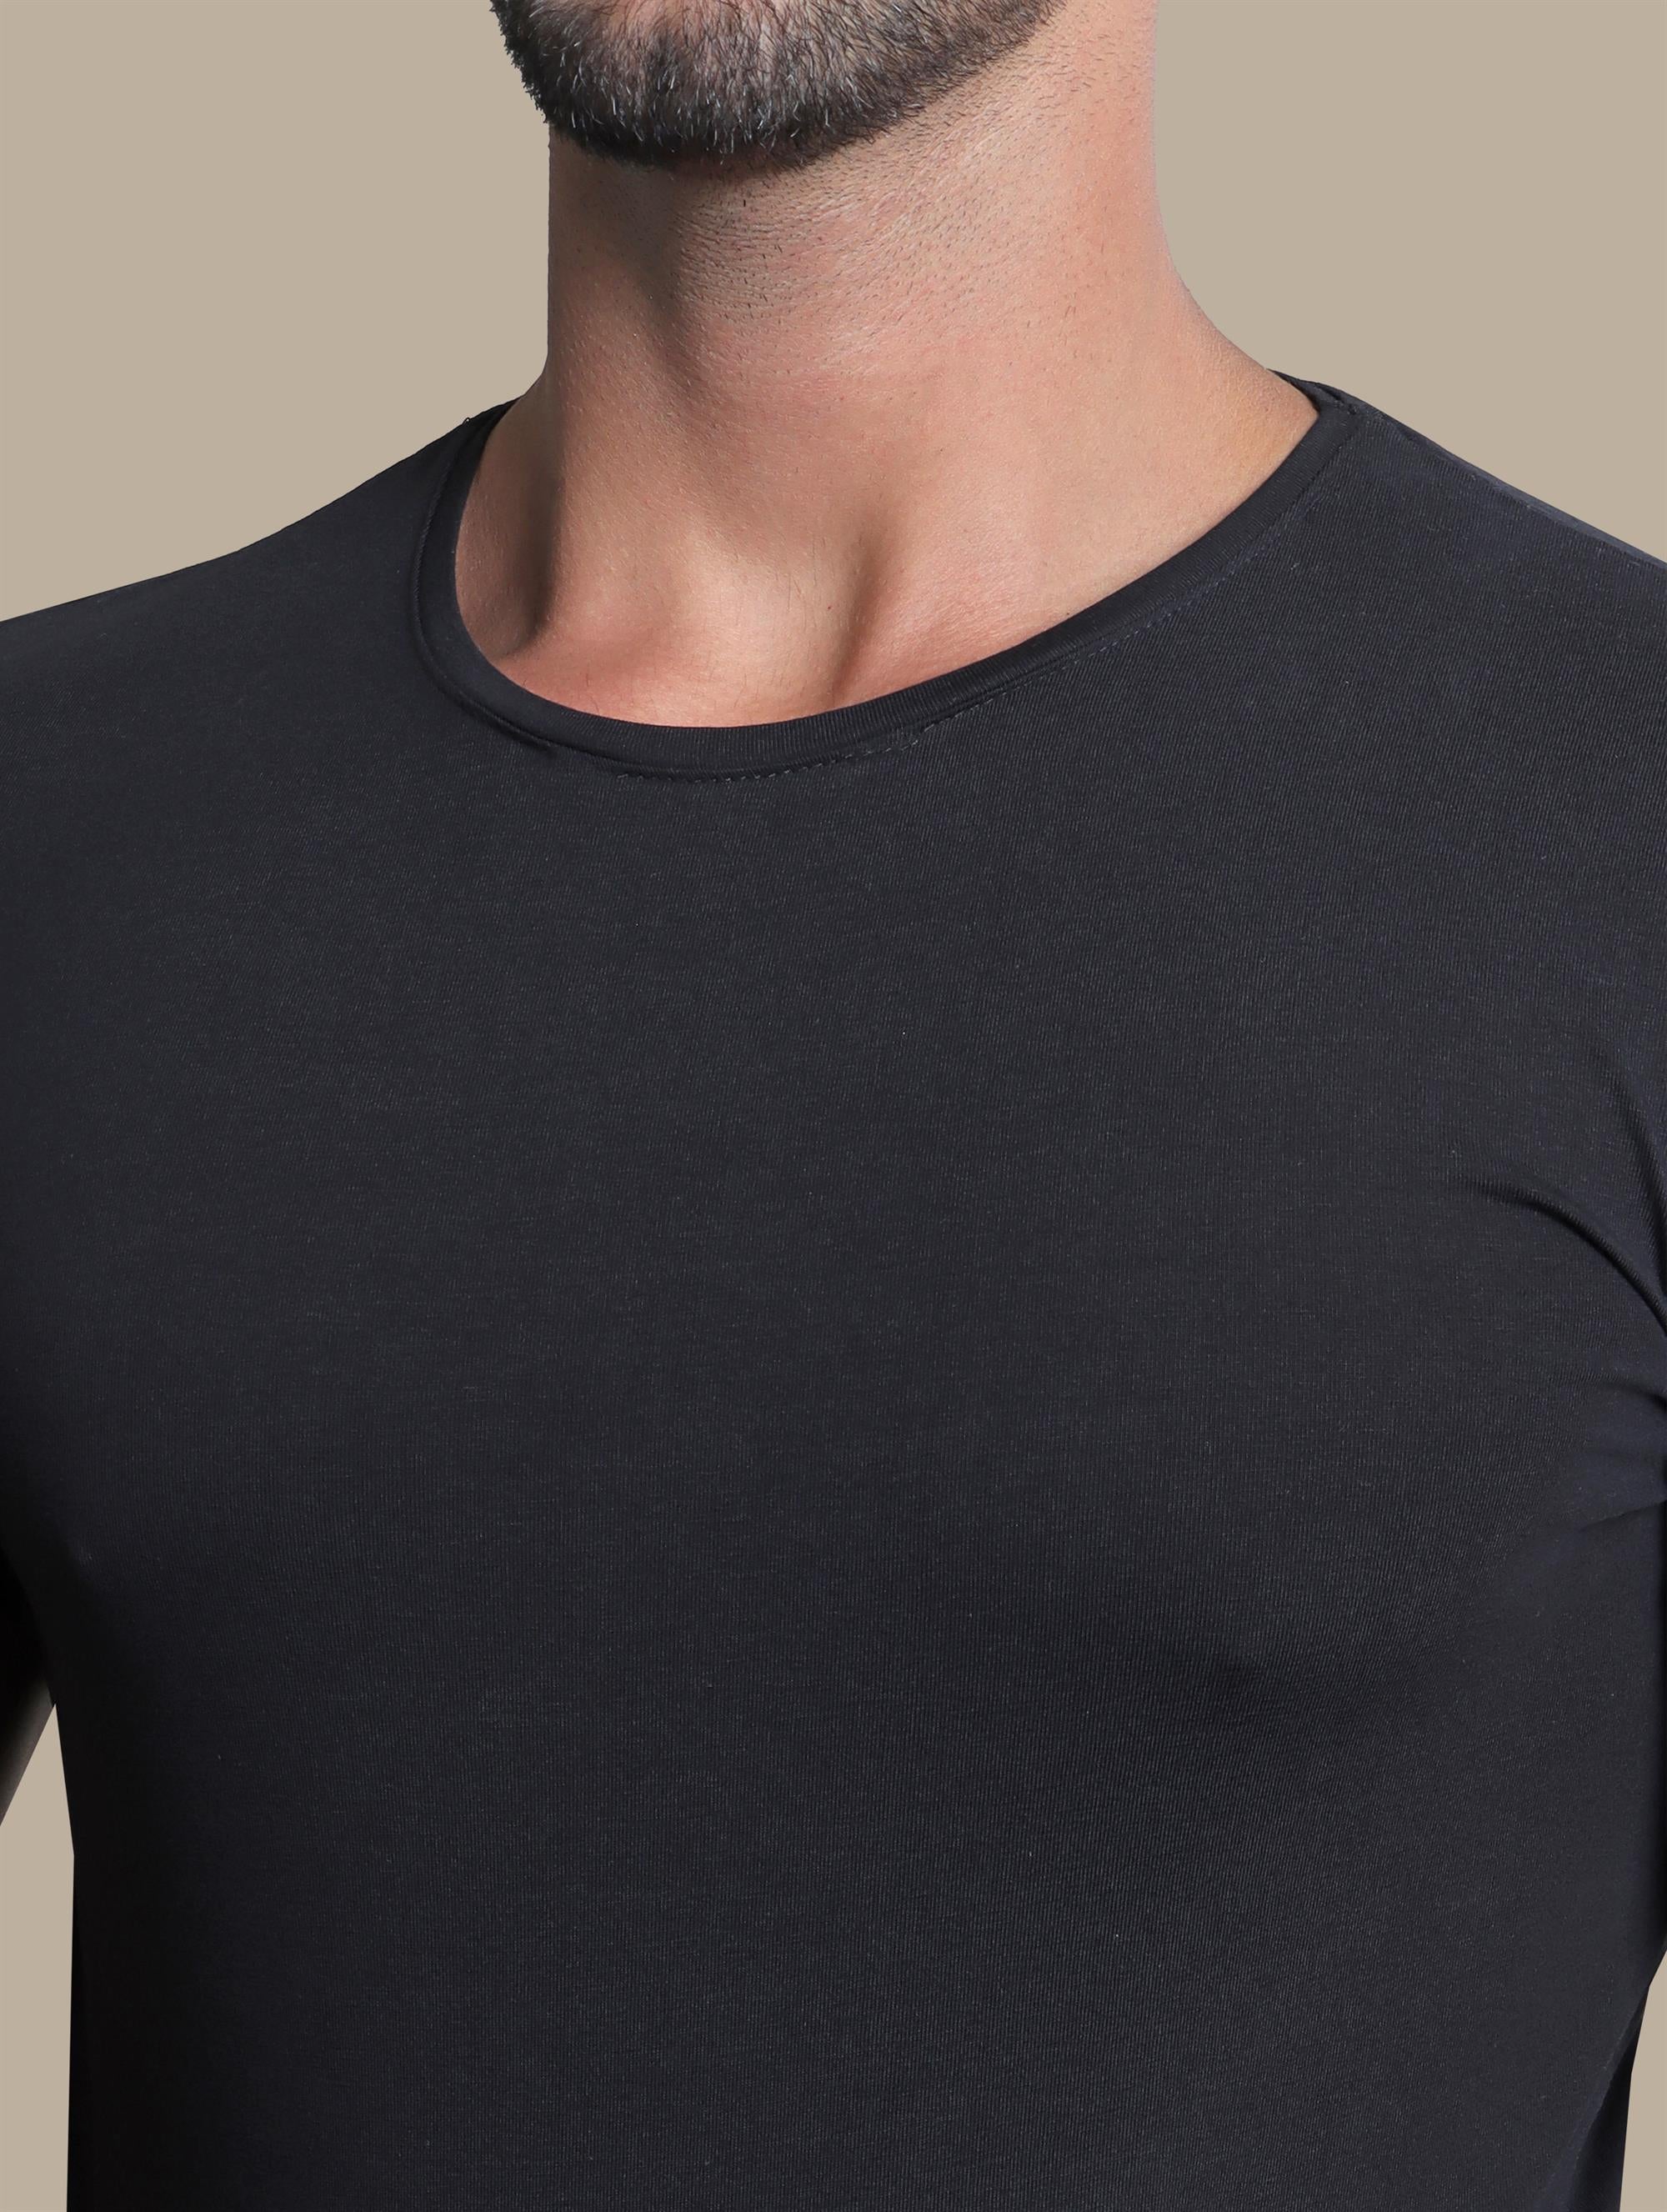 Classic Noir: Black Short Sleeve Basic T-Shirt